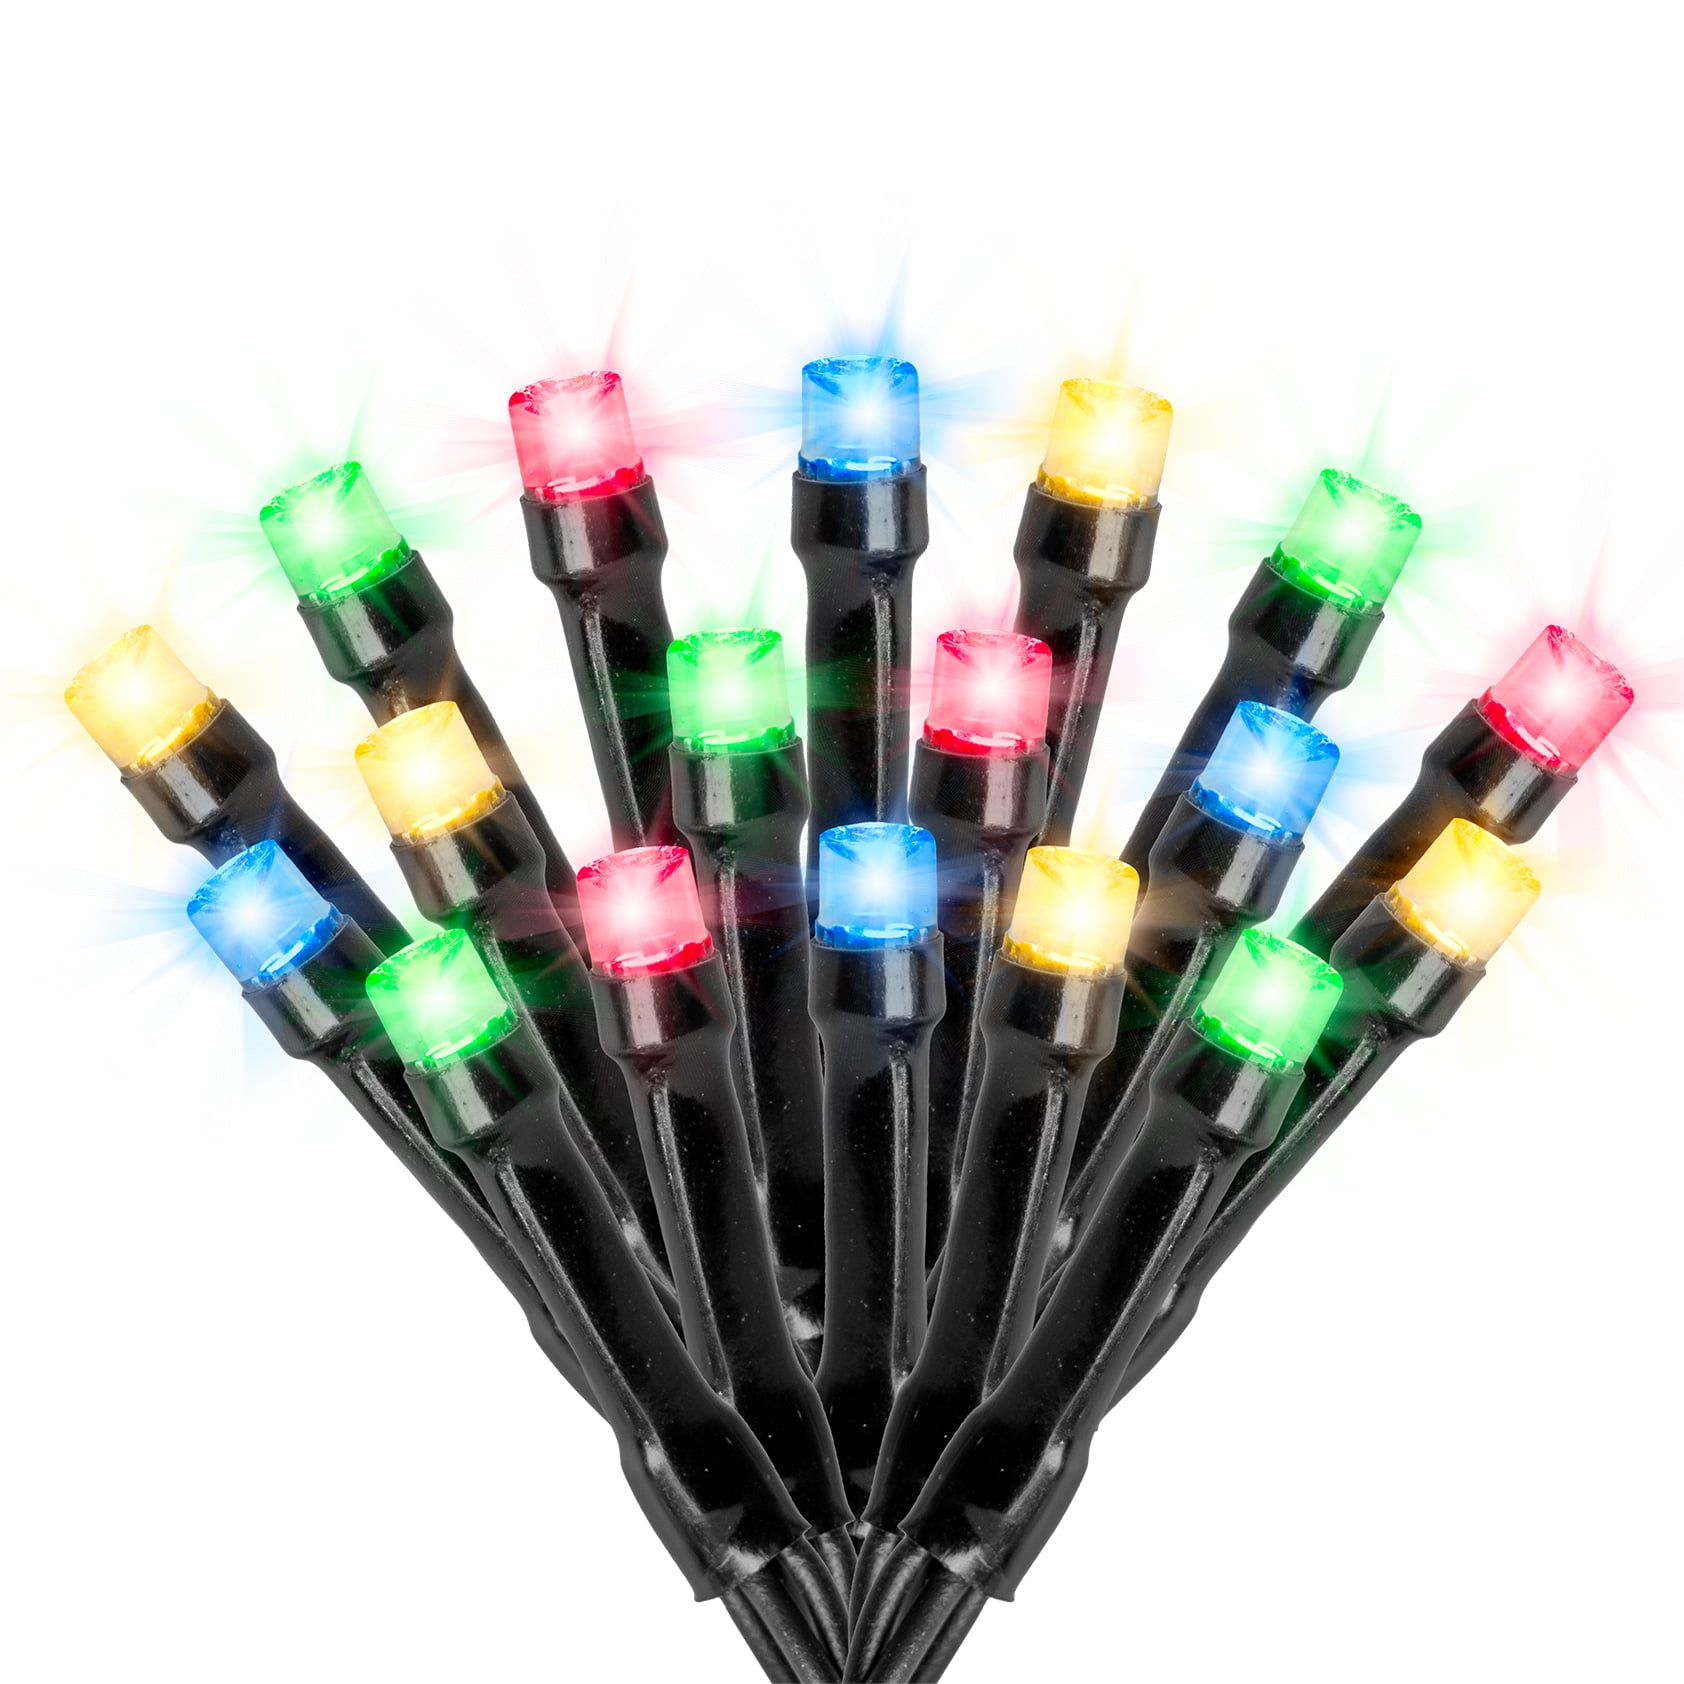 125 Solar Powered LED String Lights, 68 Feet - Multi-Colored - Walmart.com